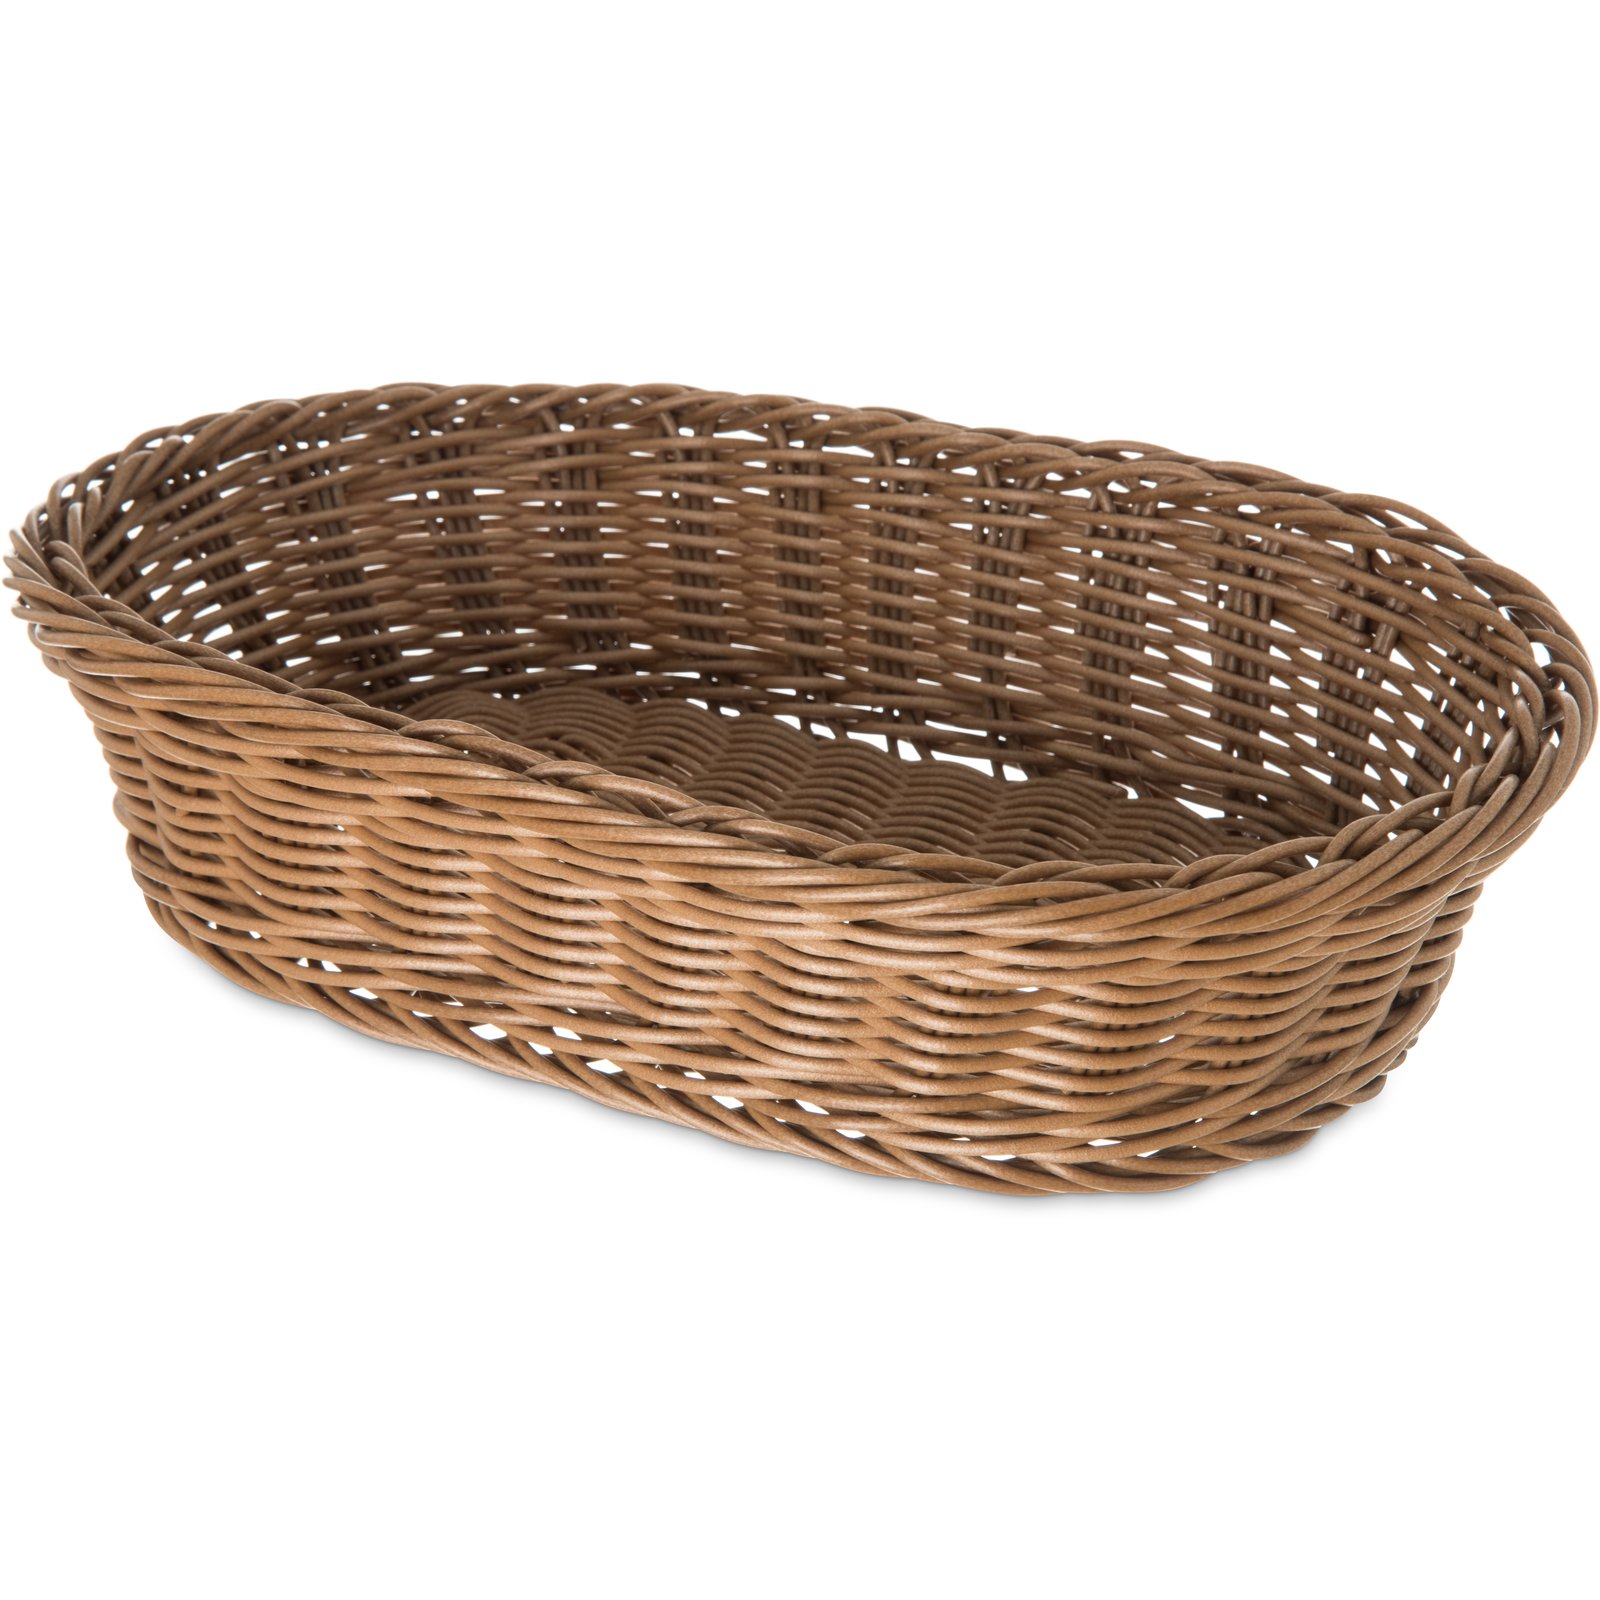 655125 - Woven Baskets Oval Basket 11.5" - Caramel ...
